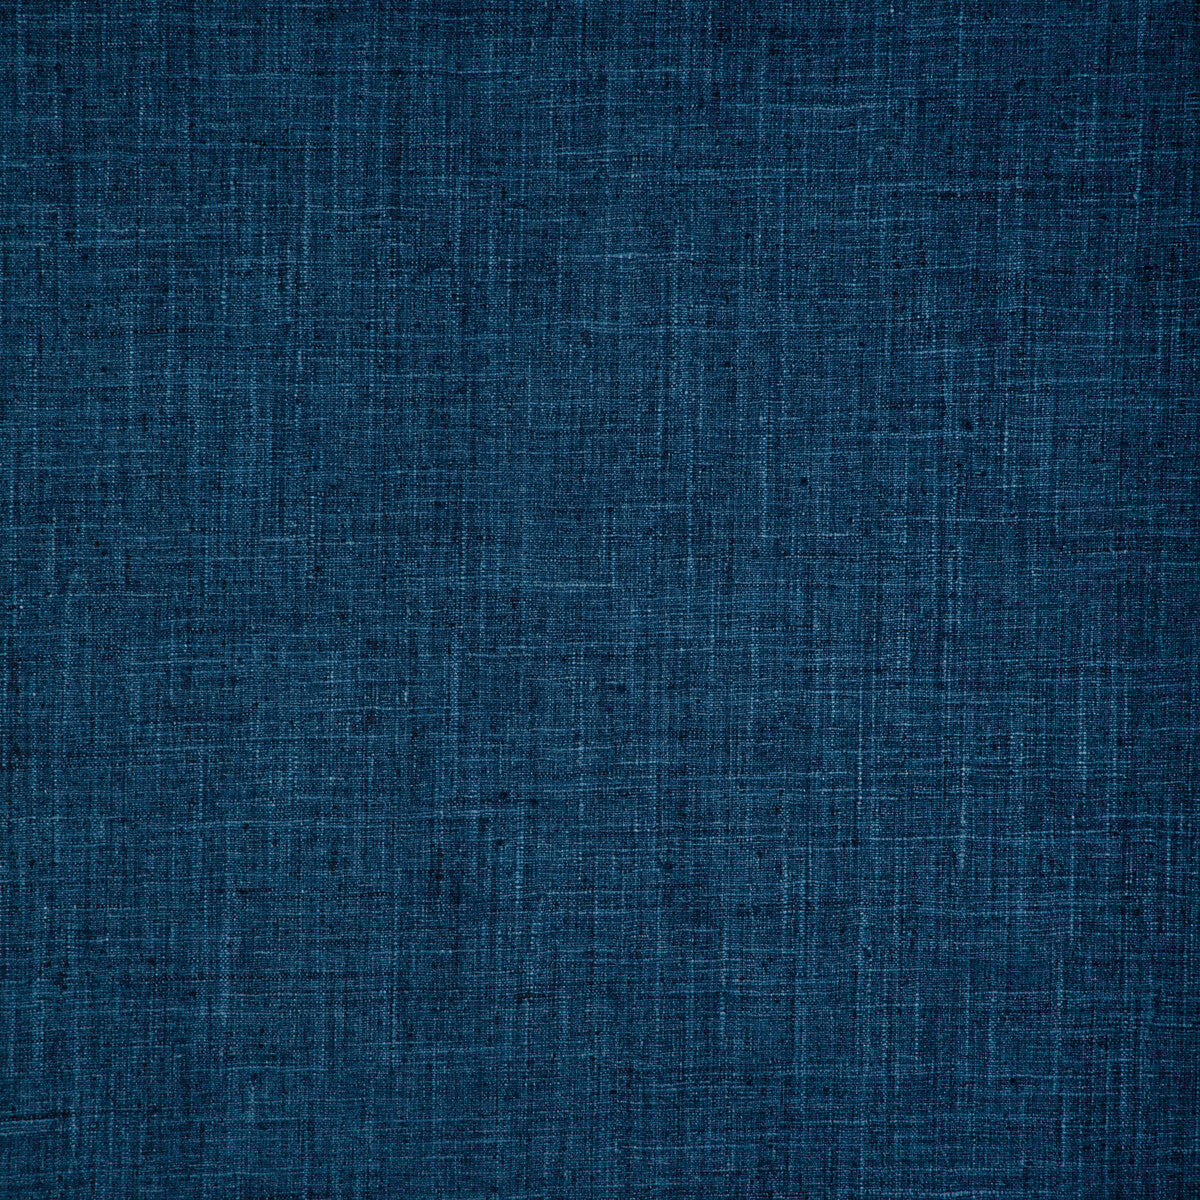 Kravet Smart fabric in 34983-515 color - pattern 34983.515.0 - by Kravet Smart